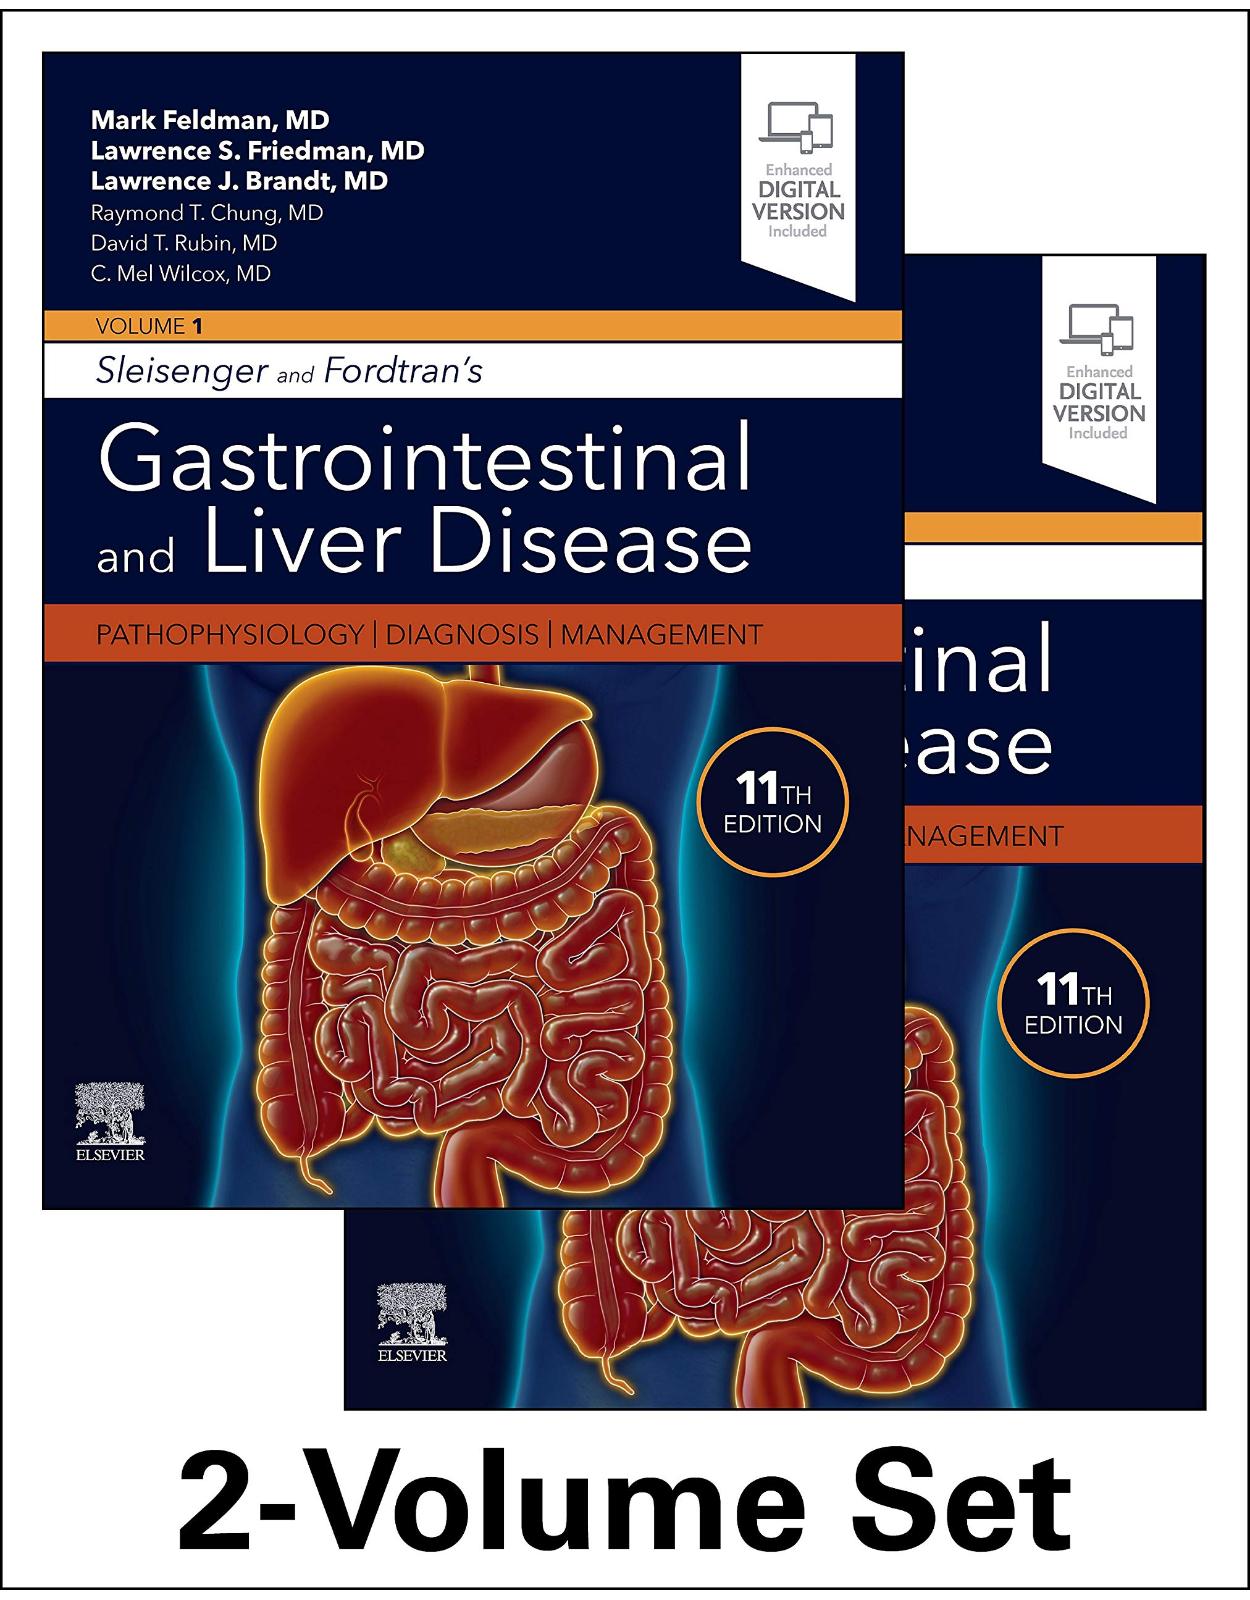 Sleisenger and Fordtran’s Gastrointestinal and Liver Disease- 2 Volume Set